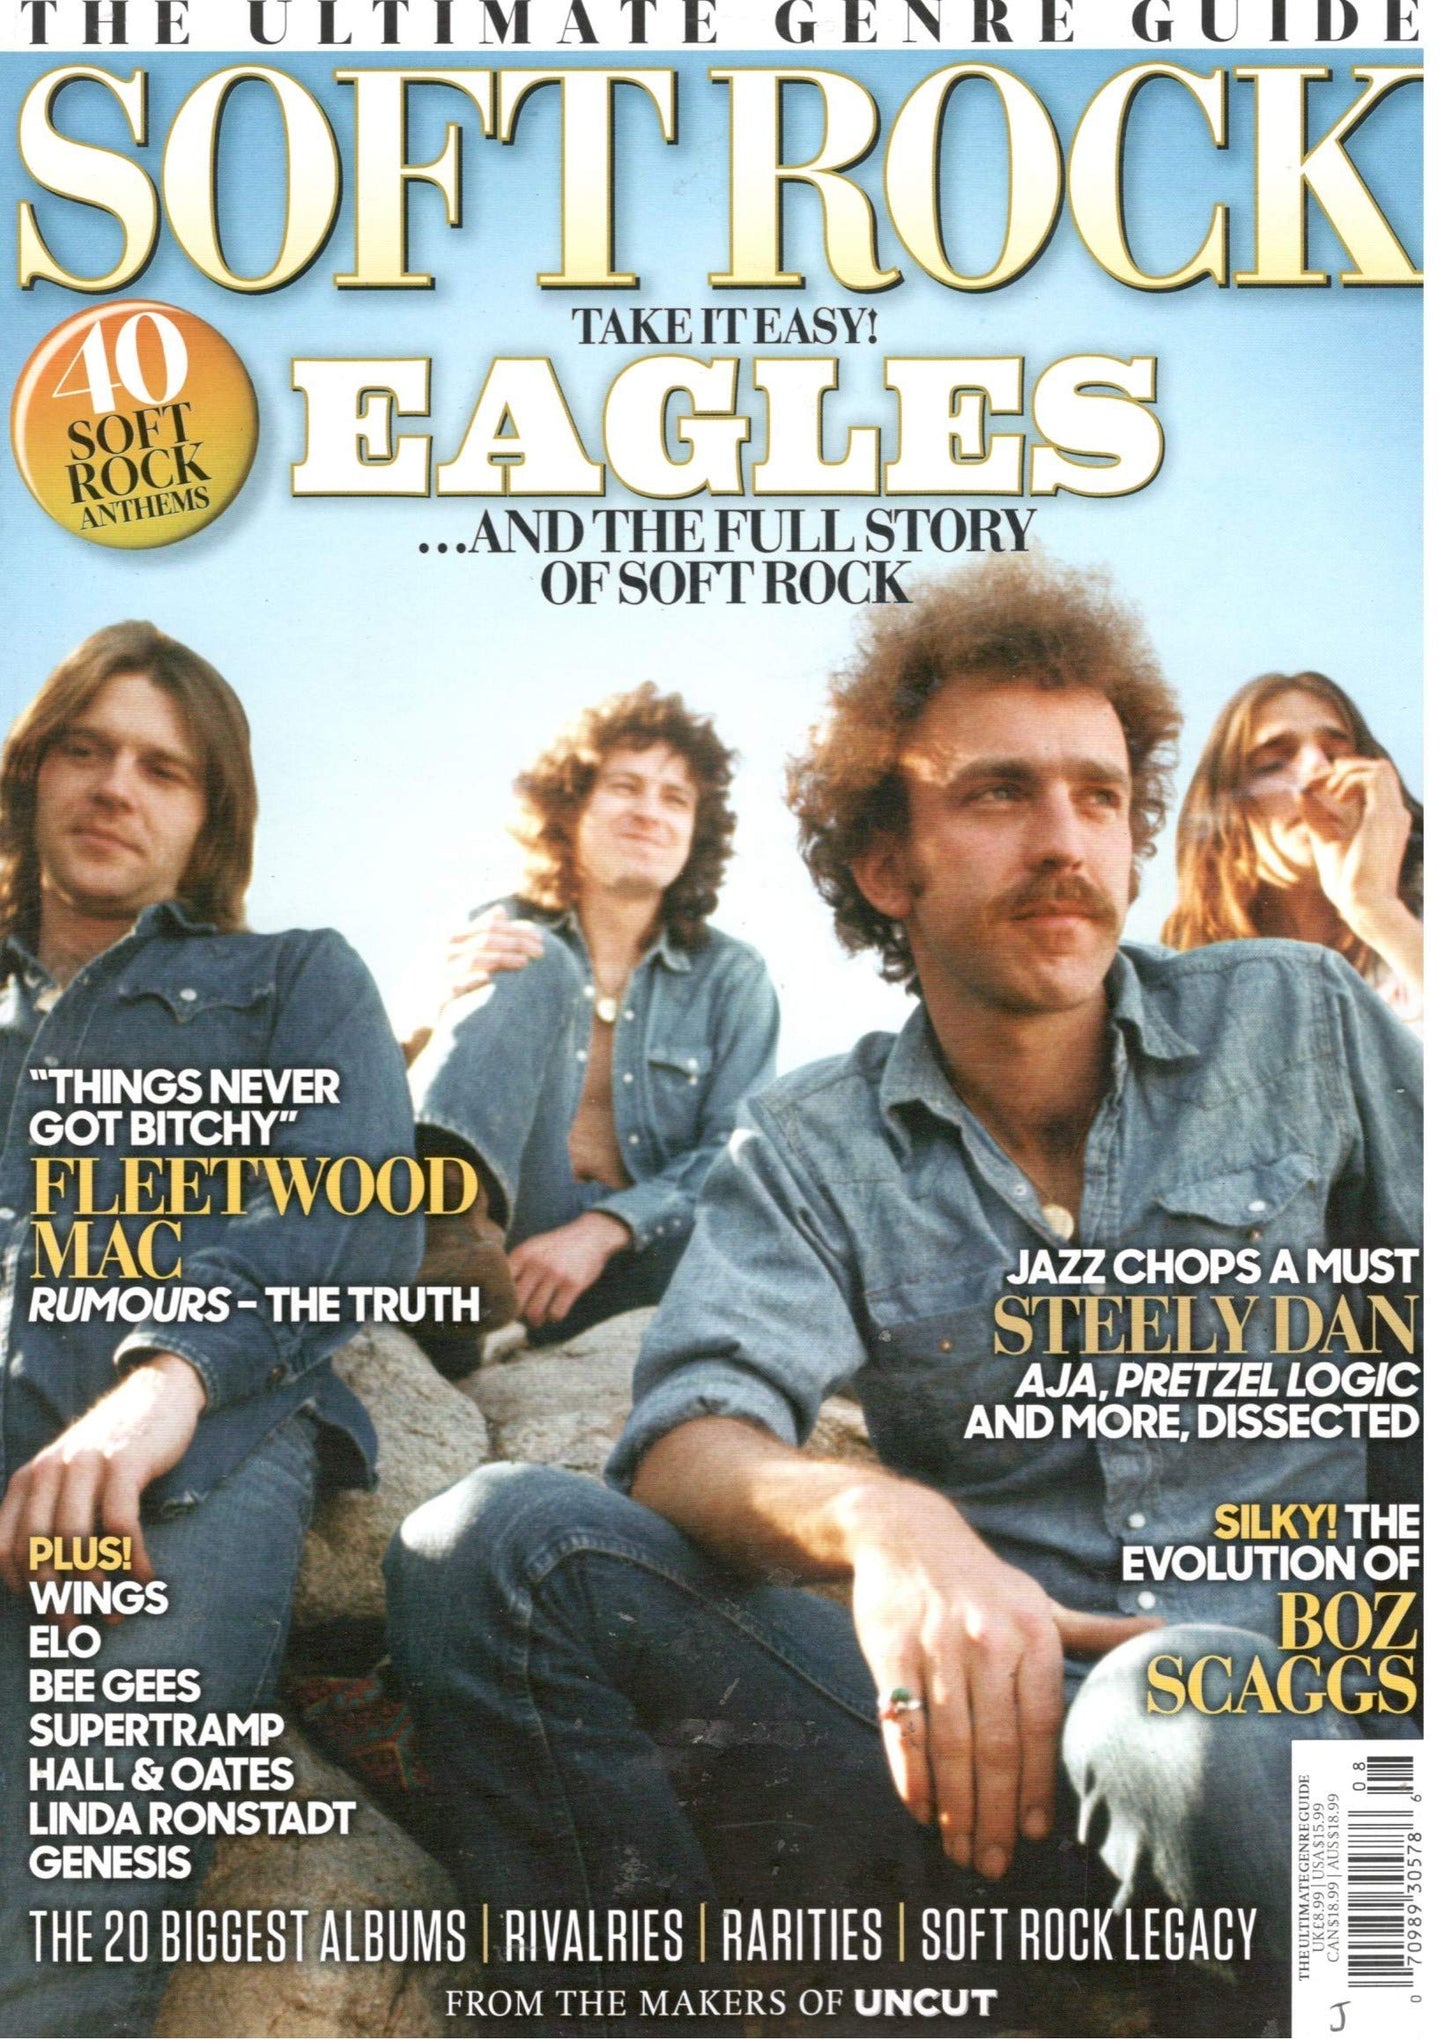 Uncut Ultimate Genre Guide to Soft Rock (2019) - Eagles